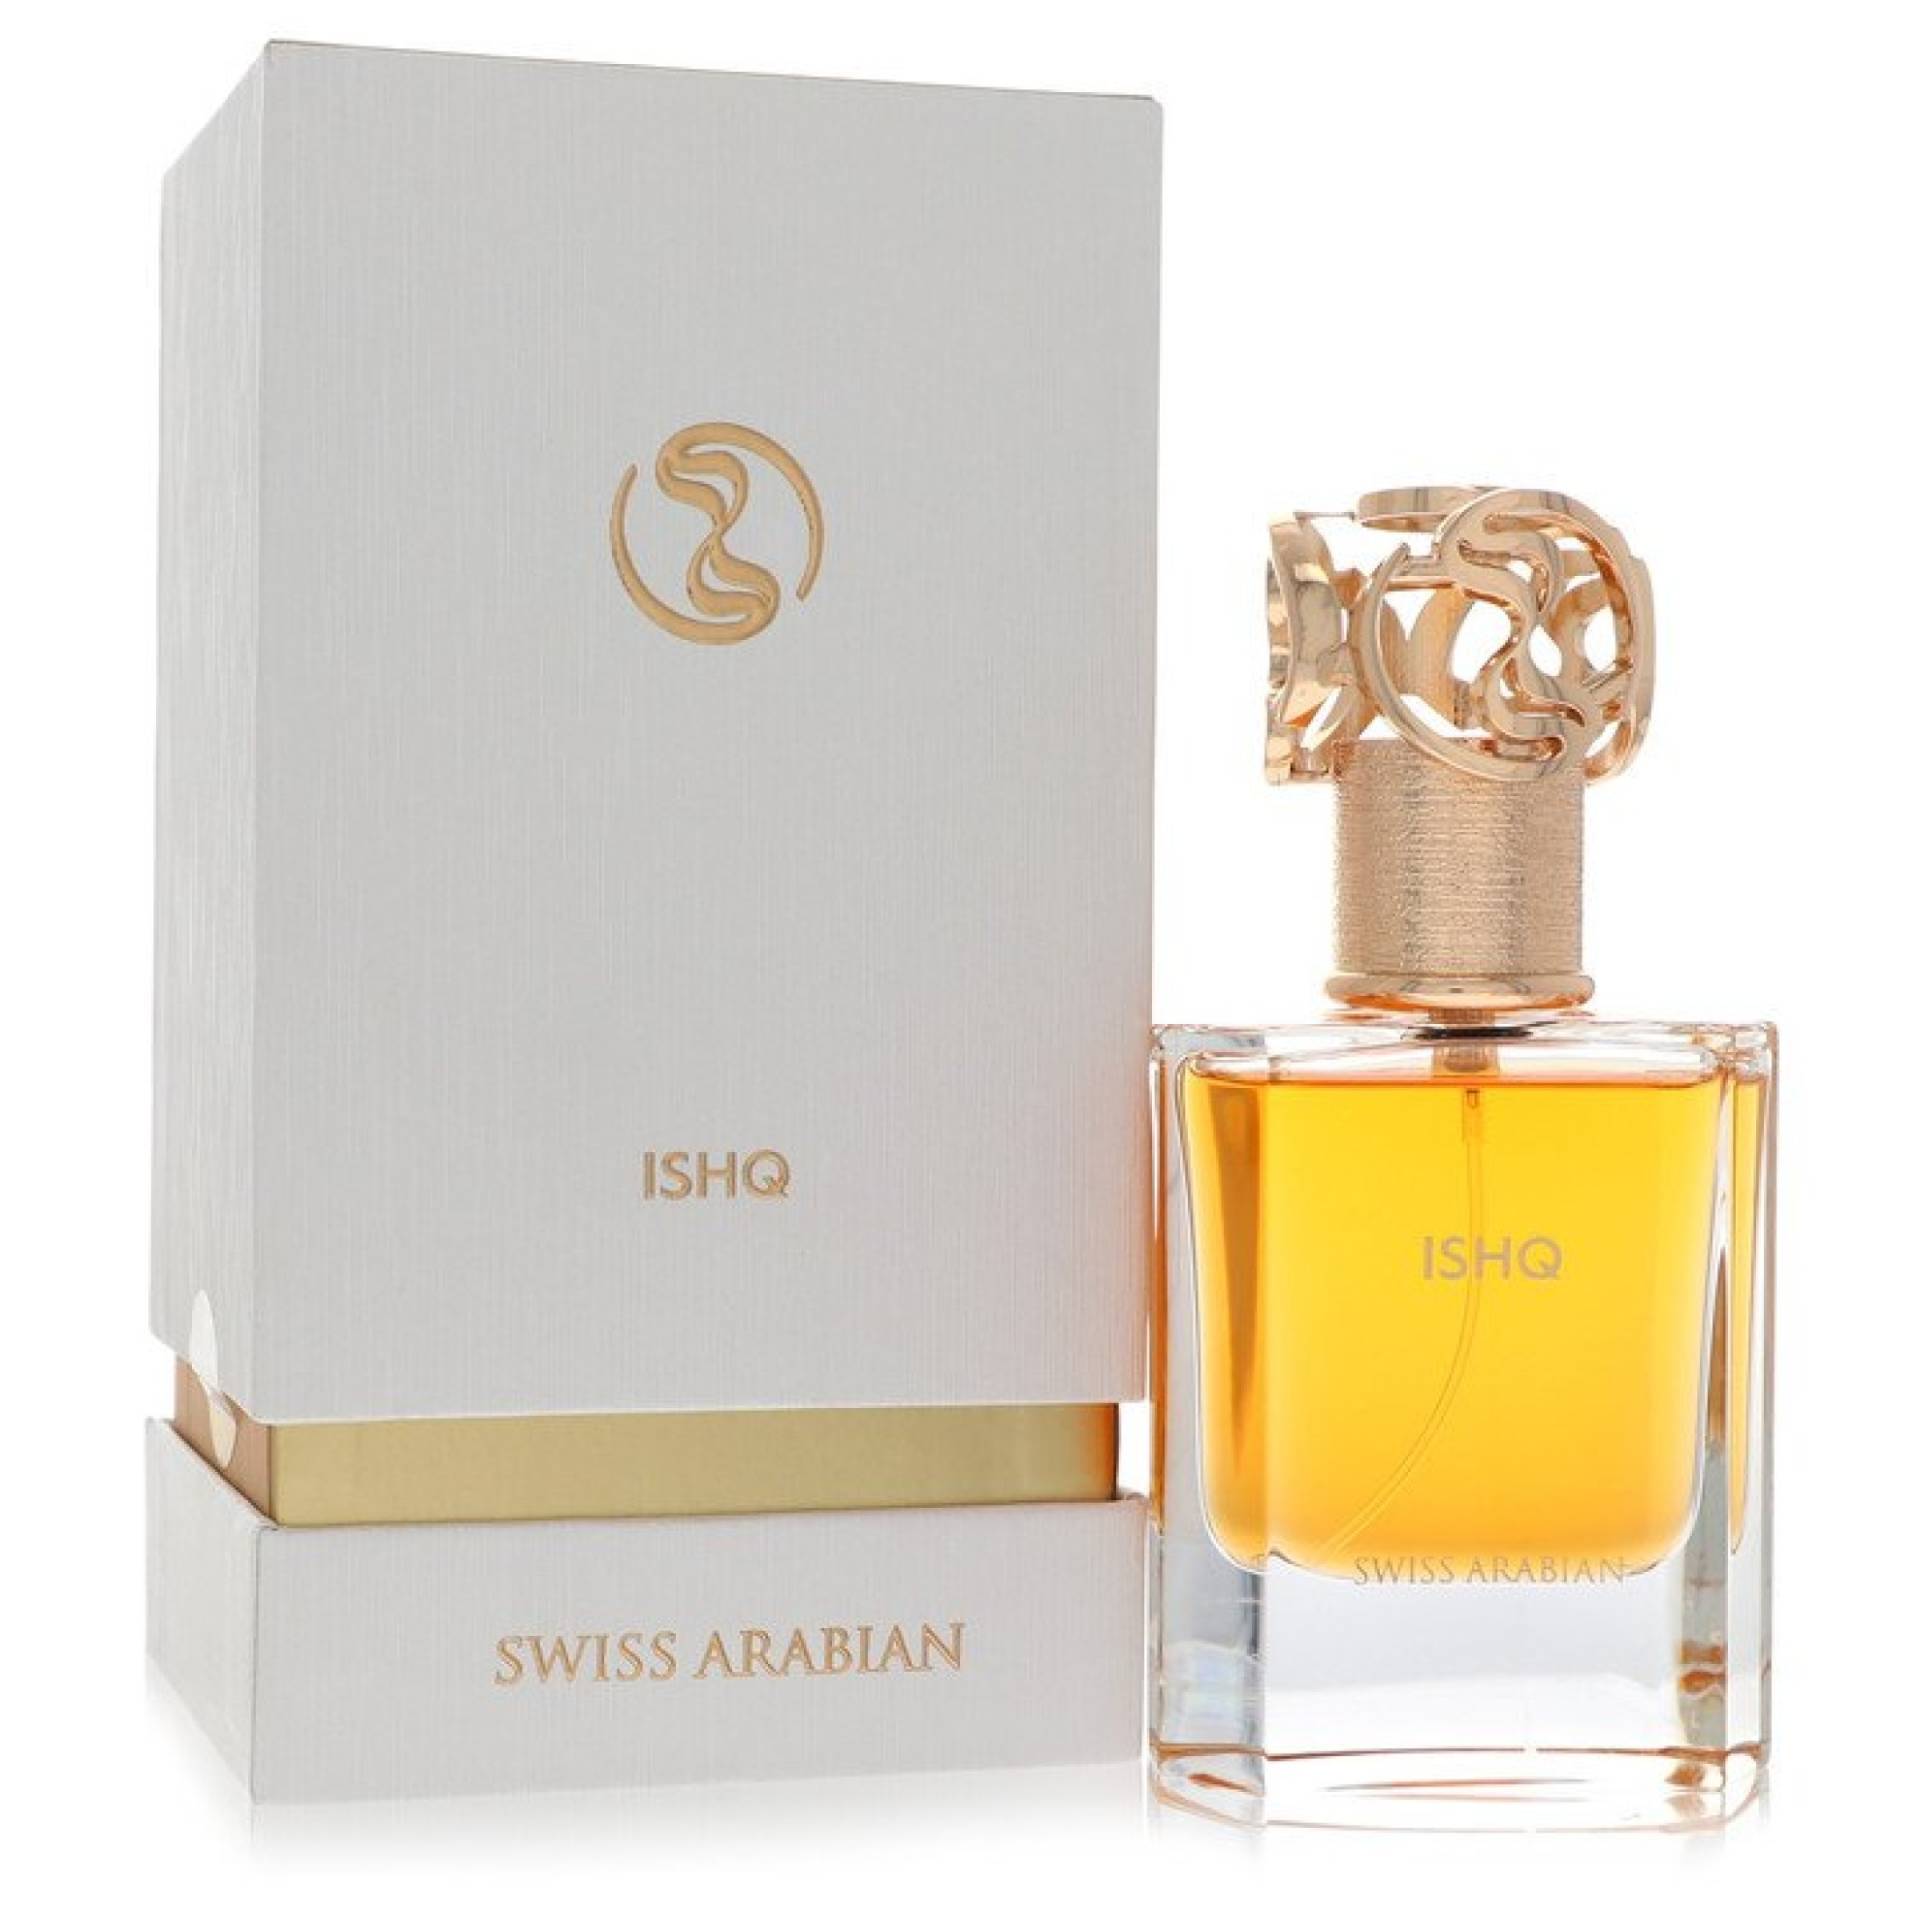 Swiss Arabian Ishq Eau De Parfum Spray (Unisex) 50 ml von Swiss Arabian